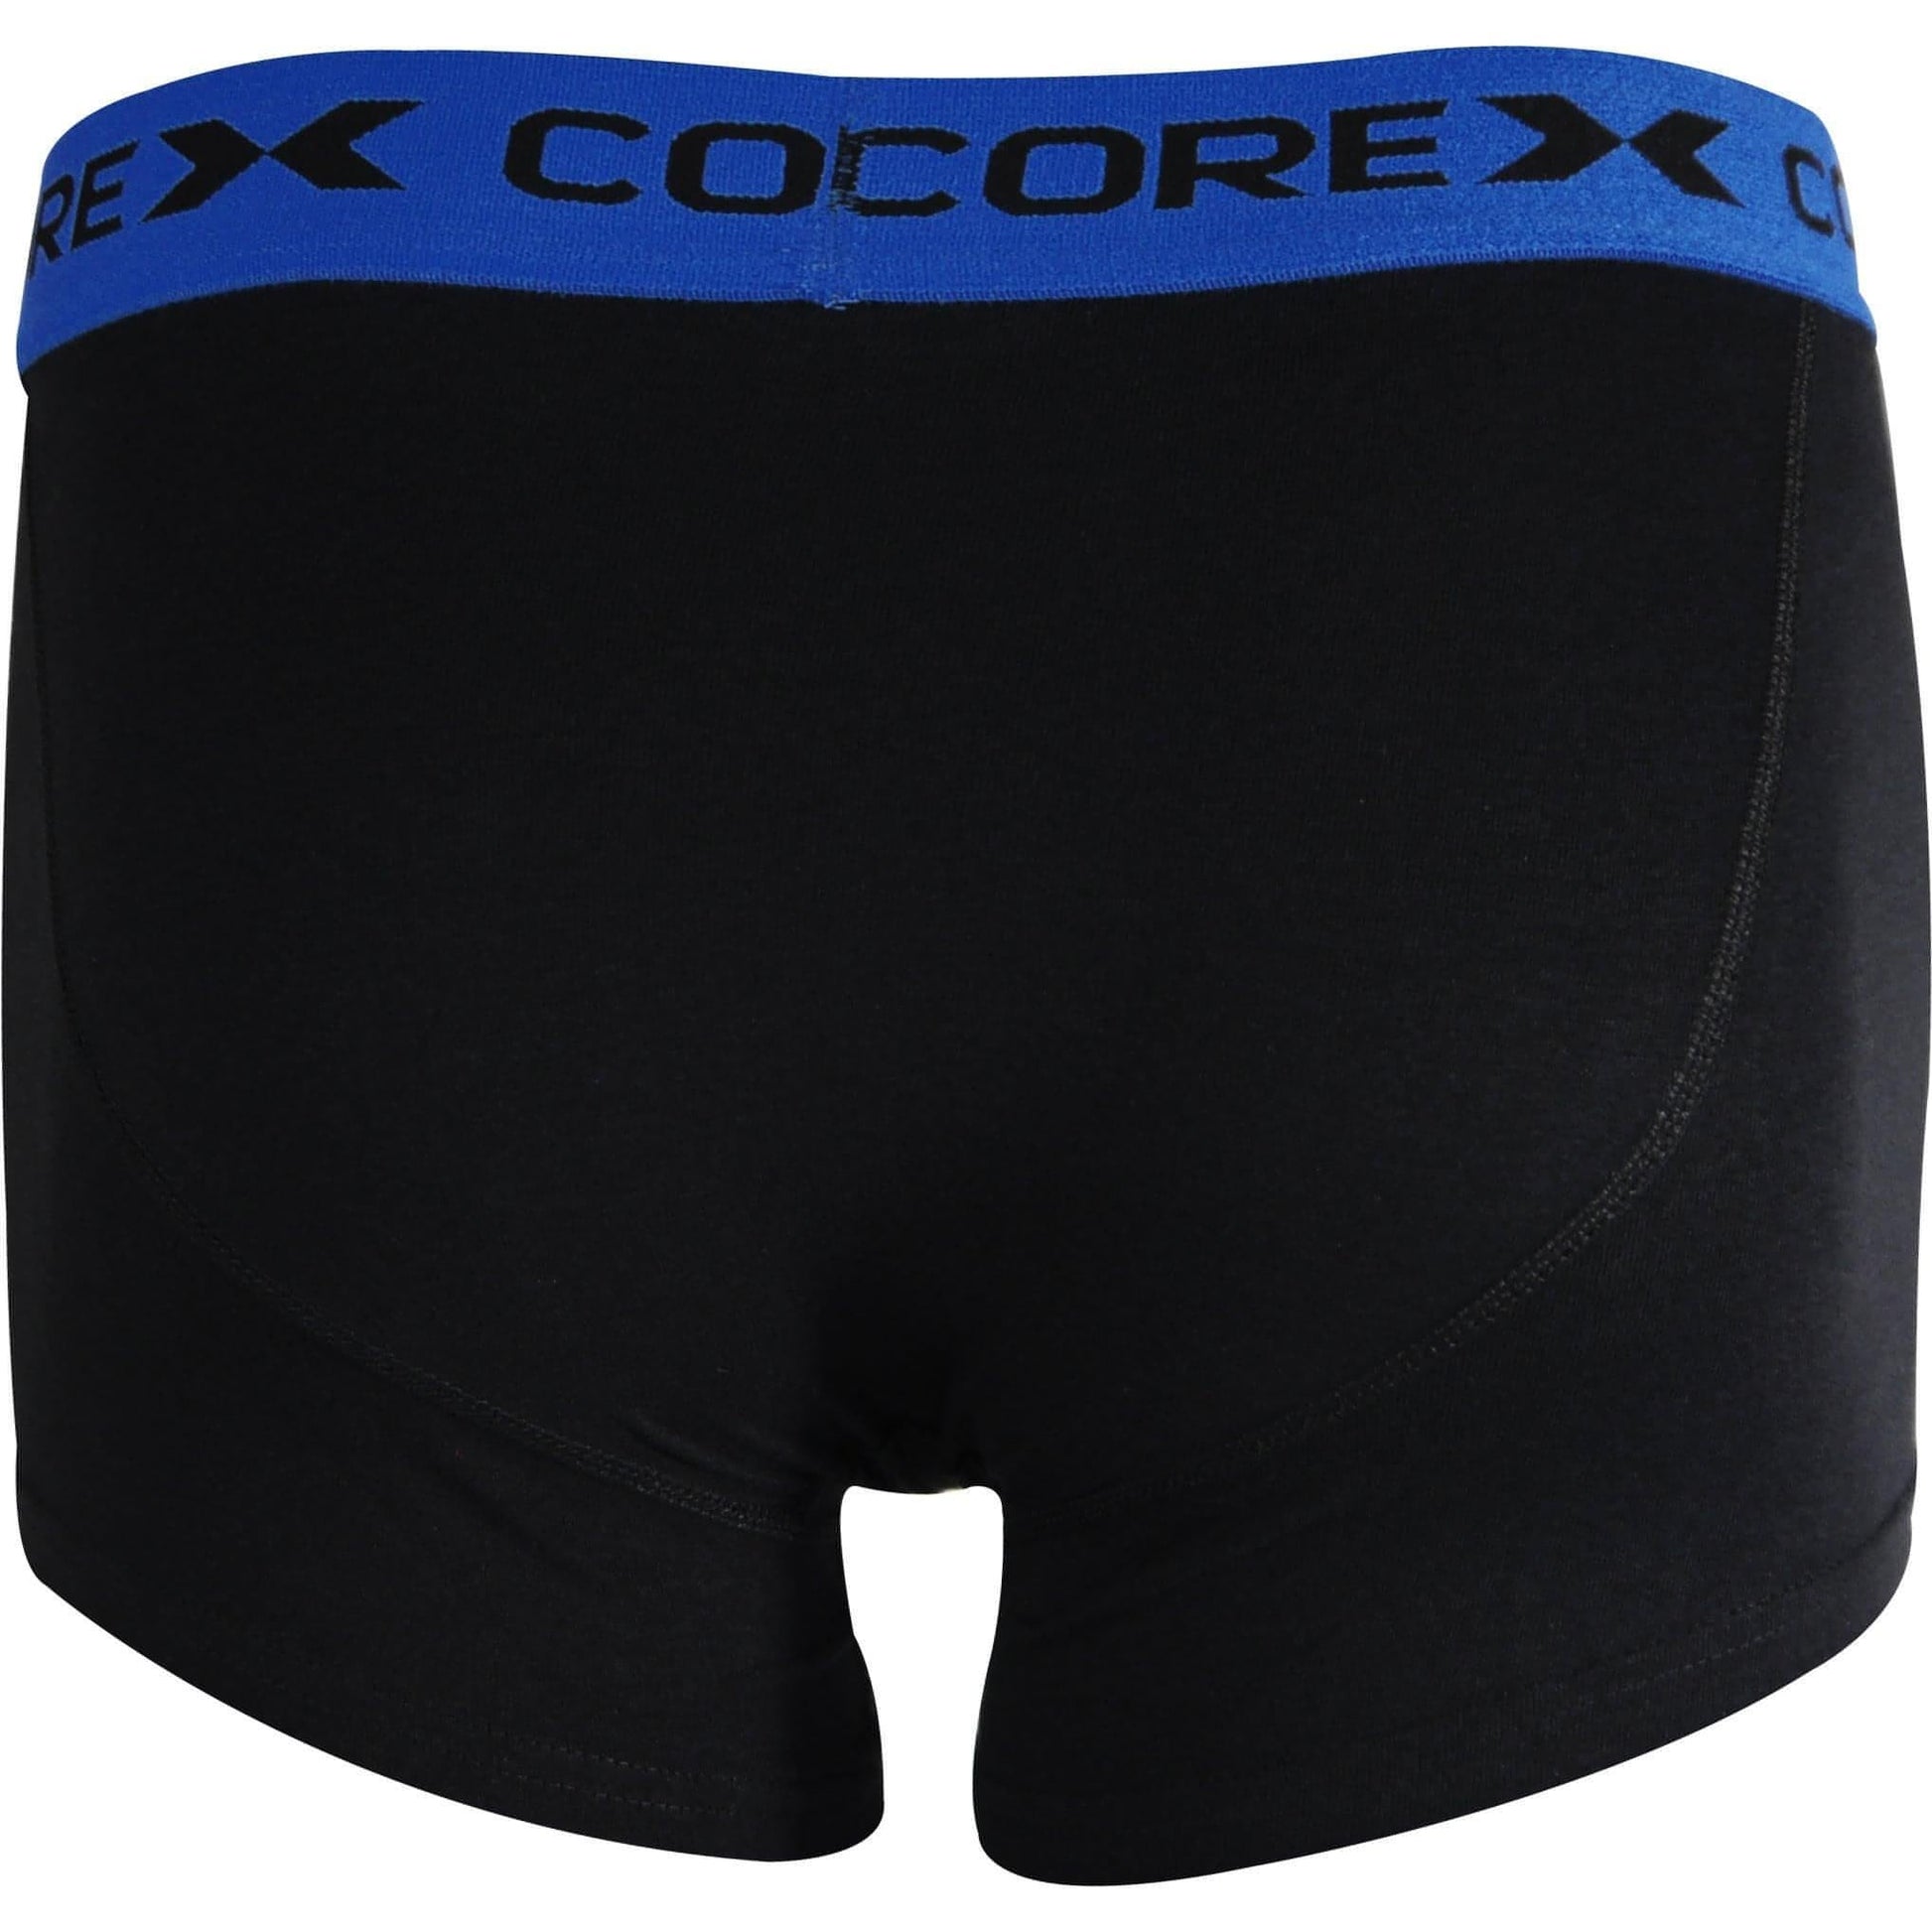 Corex Fitness Classic Pack Boxers 1P204921Wm Blueorange Blue Back View